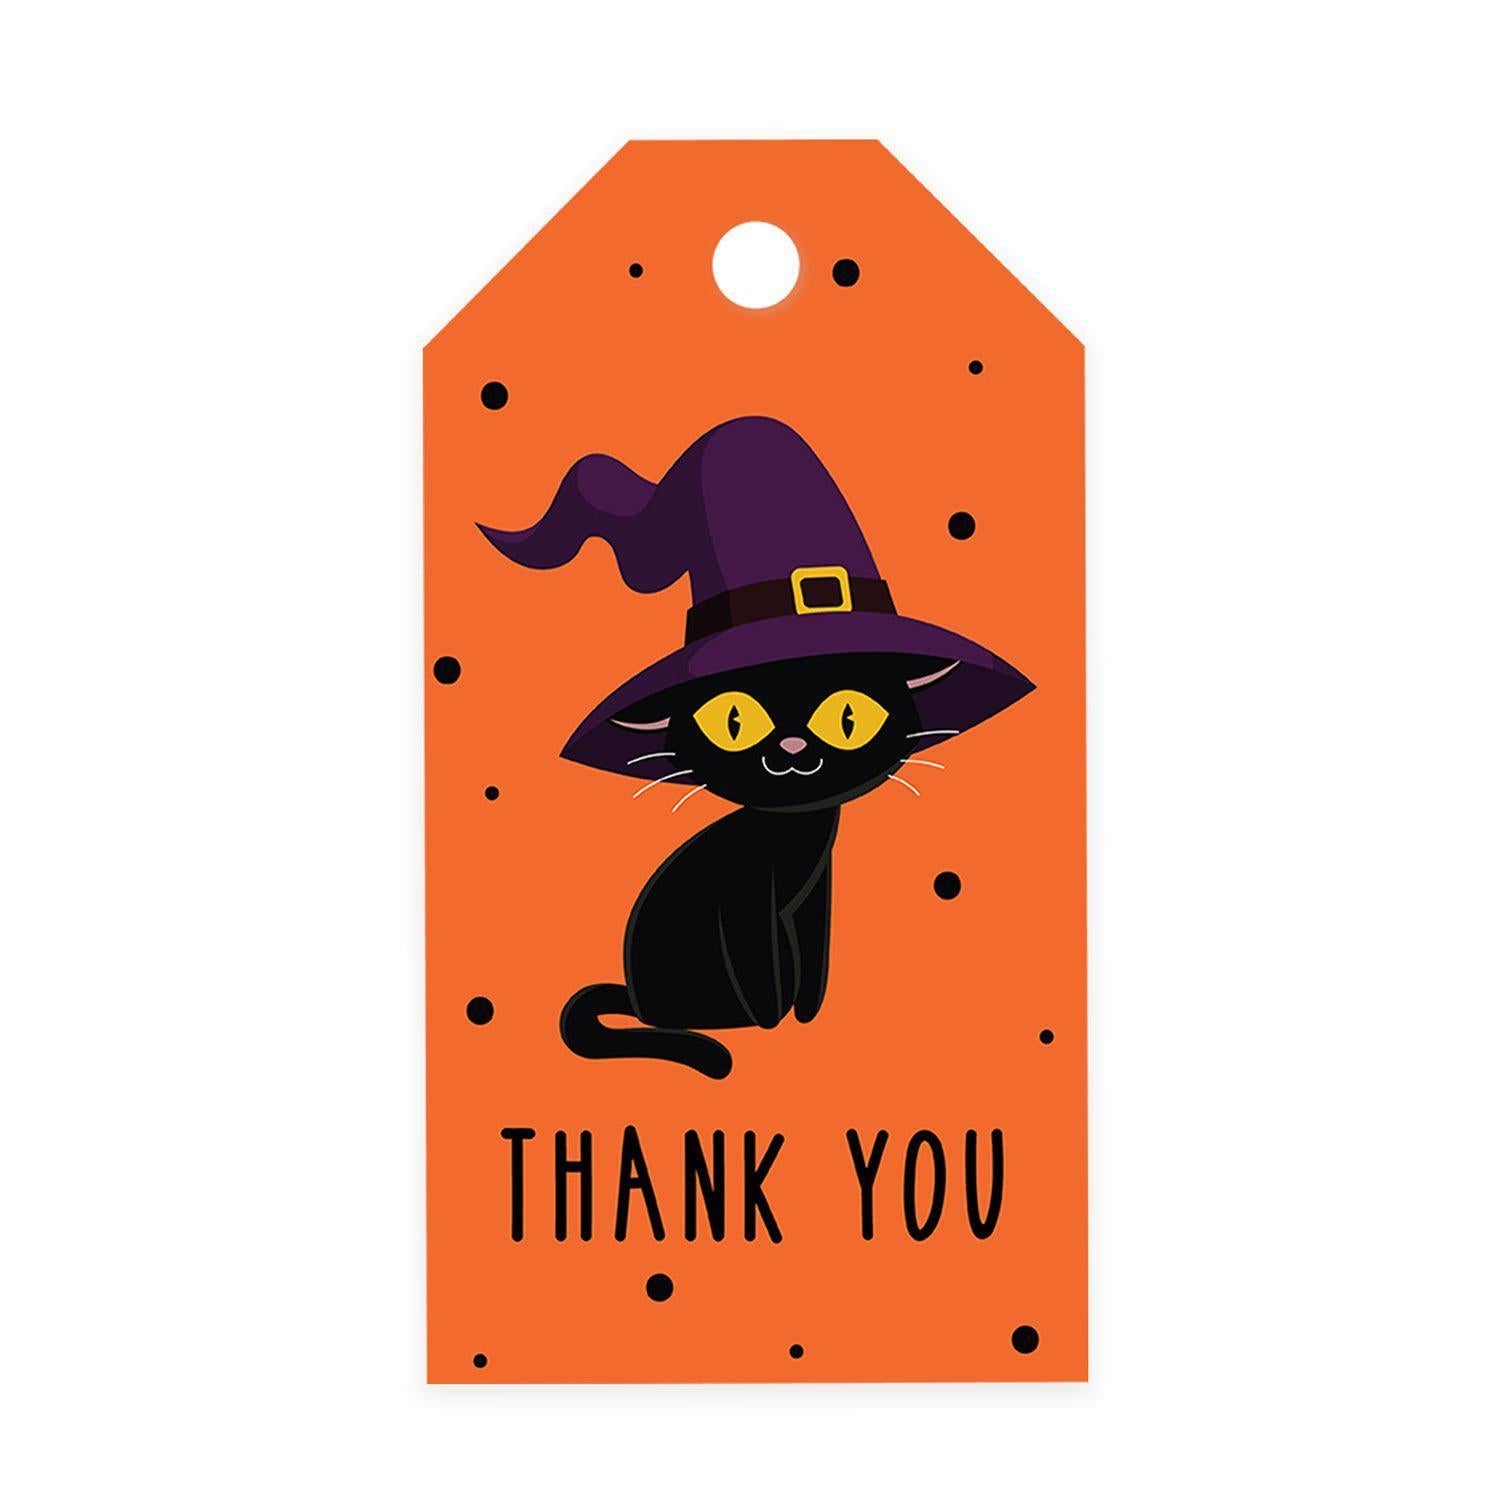 Koyal Wholesale 100-pk Smiling Pumpkin Halloween Gift Tags with String, Favor Bag Tags Halloween Decorations, Black